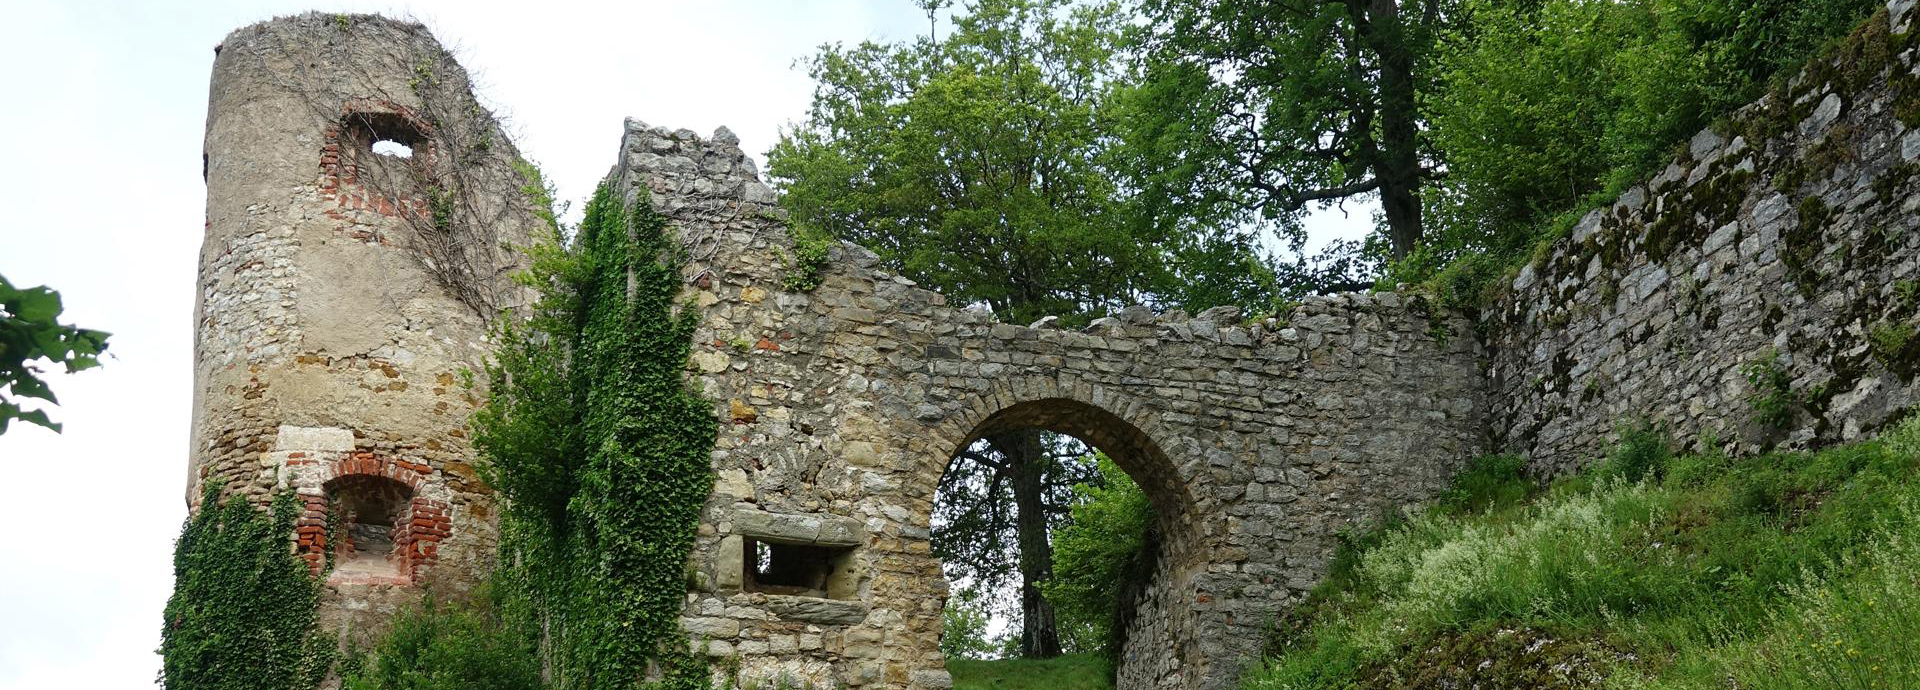 Castle of Ferrette in Alsace, a privileged historical setting